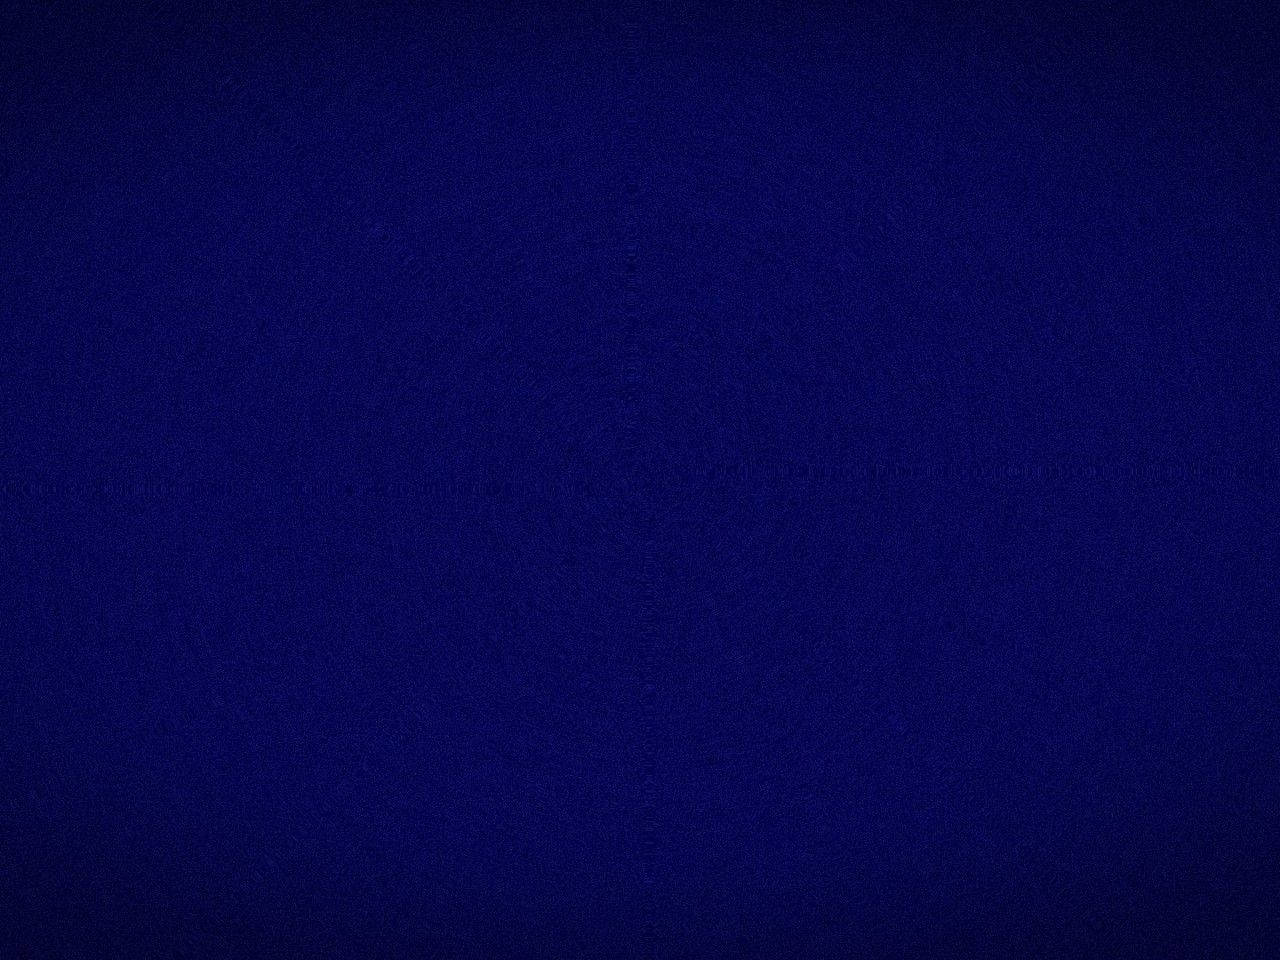 Plain Navy Blue With Light Vignette Background